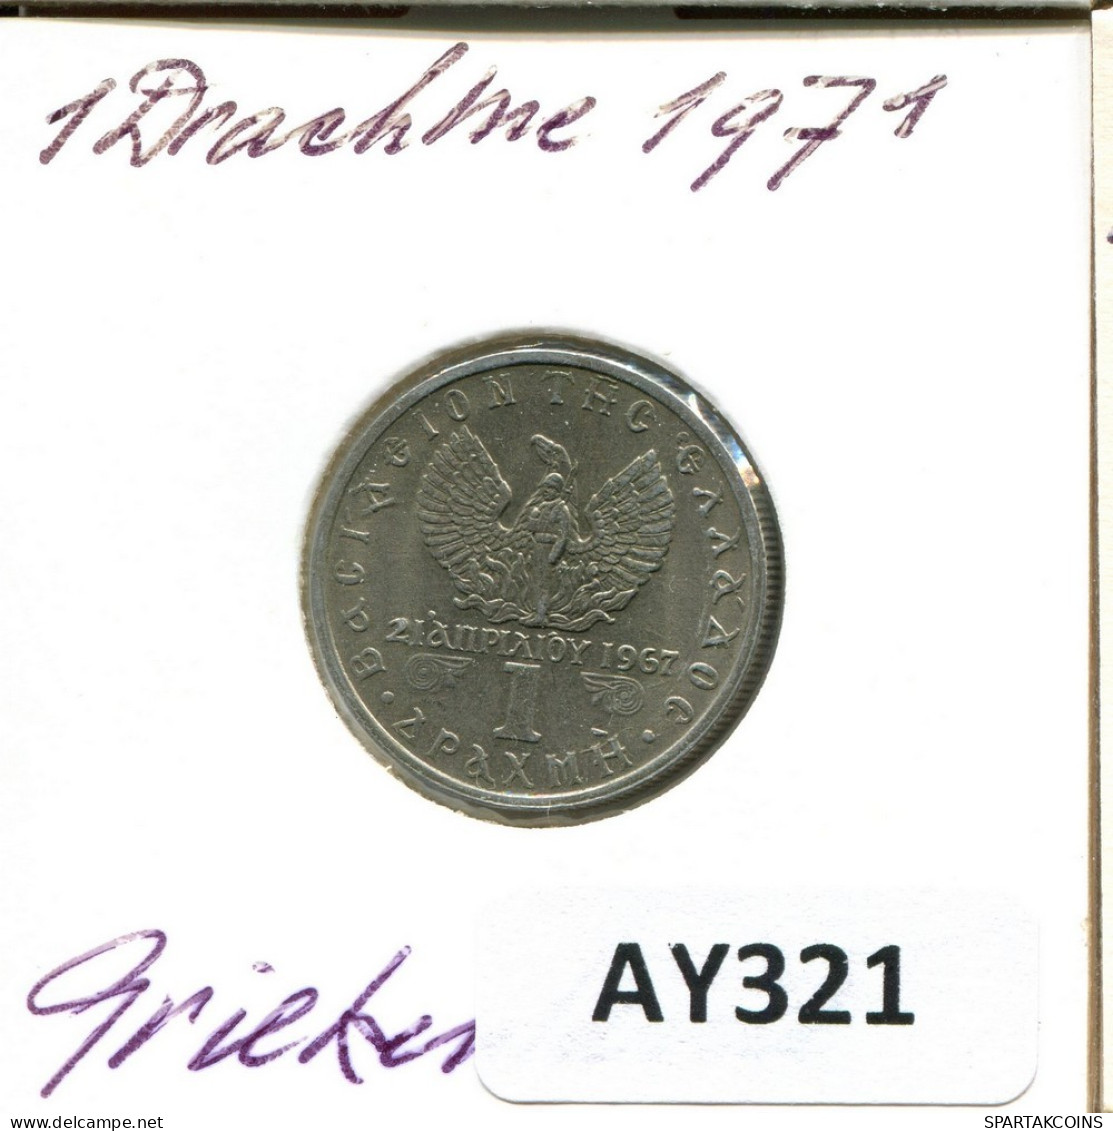 1 DRACHMA 1971 GREECE Coin #AY321.U.A - Griekenland